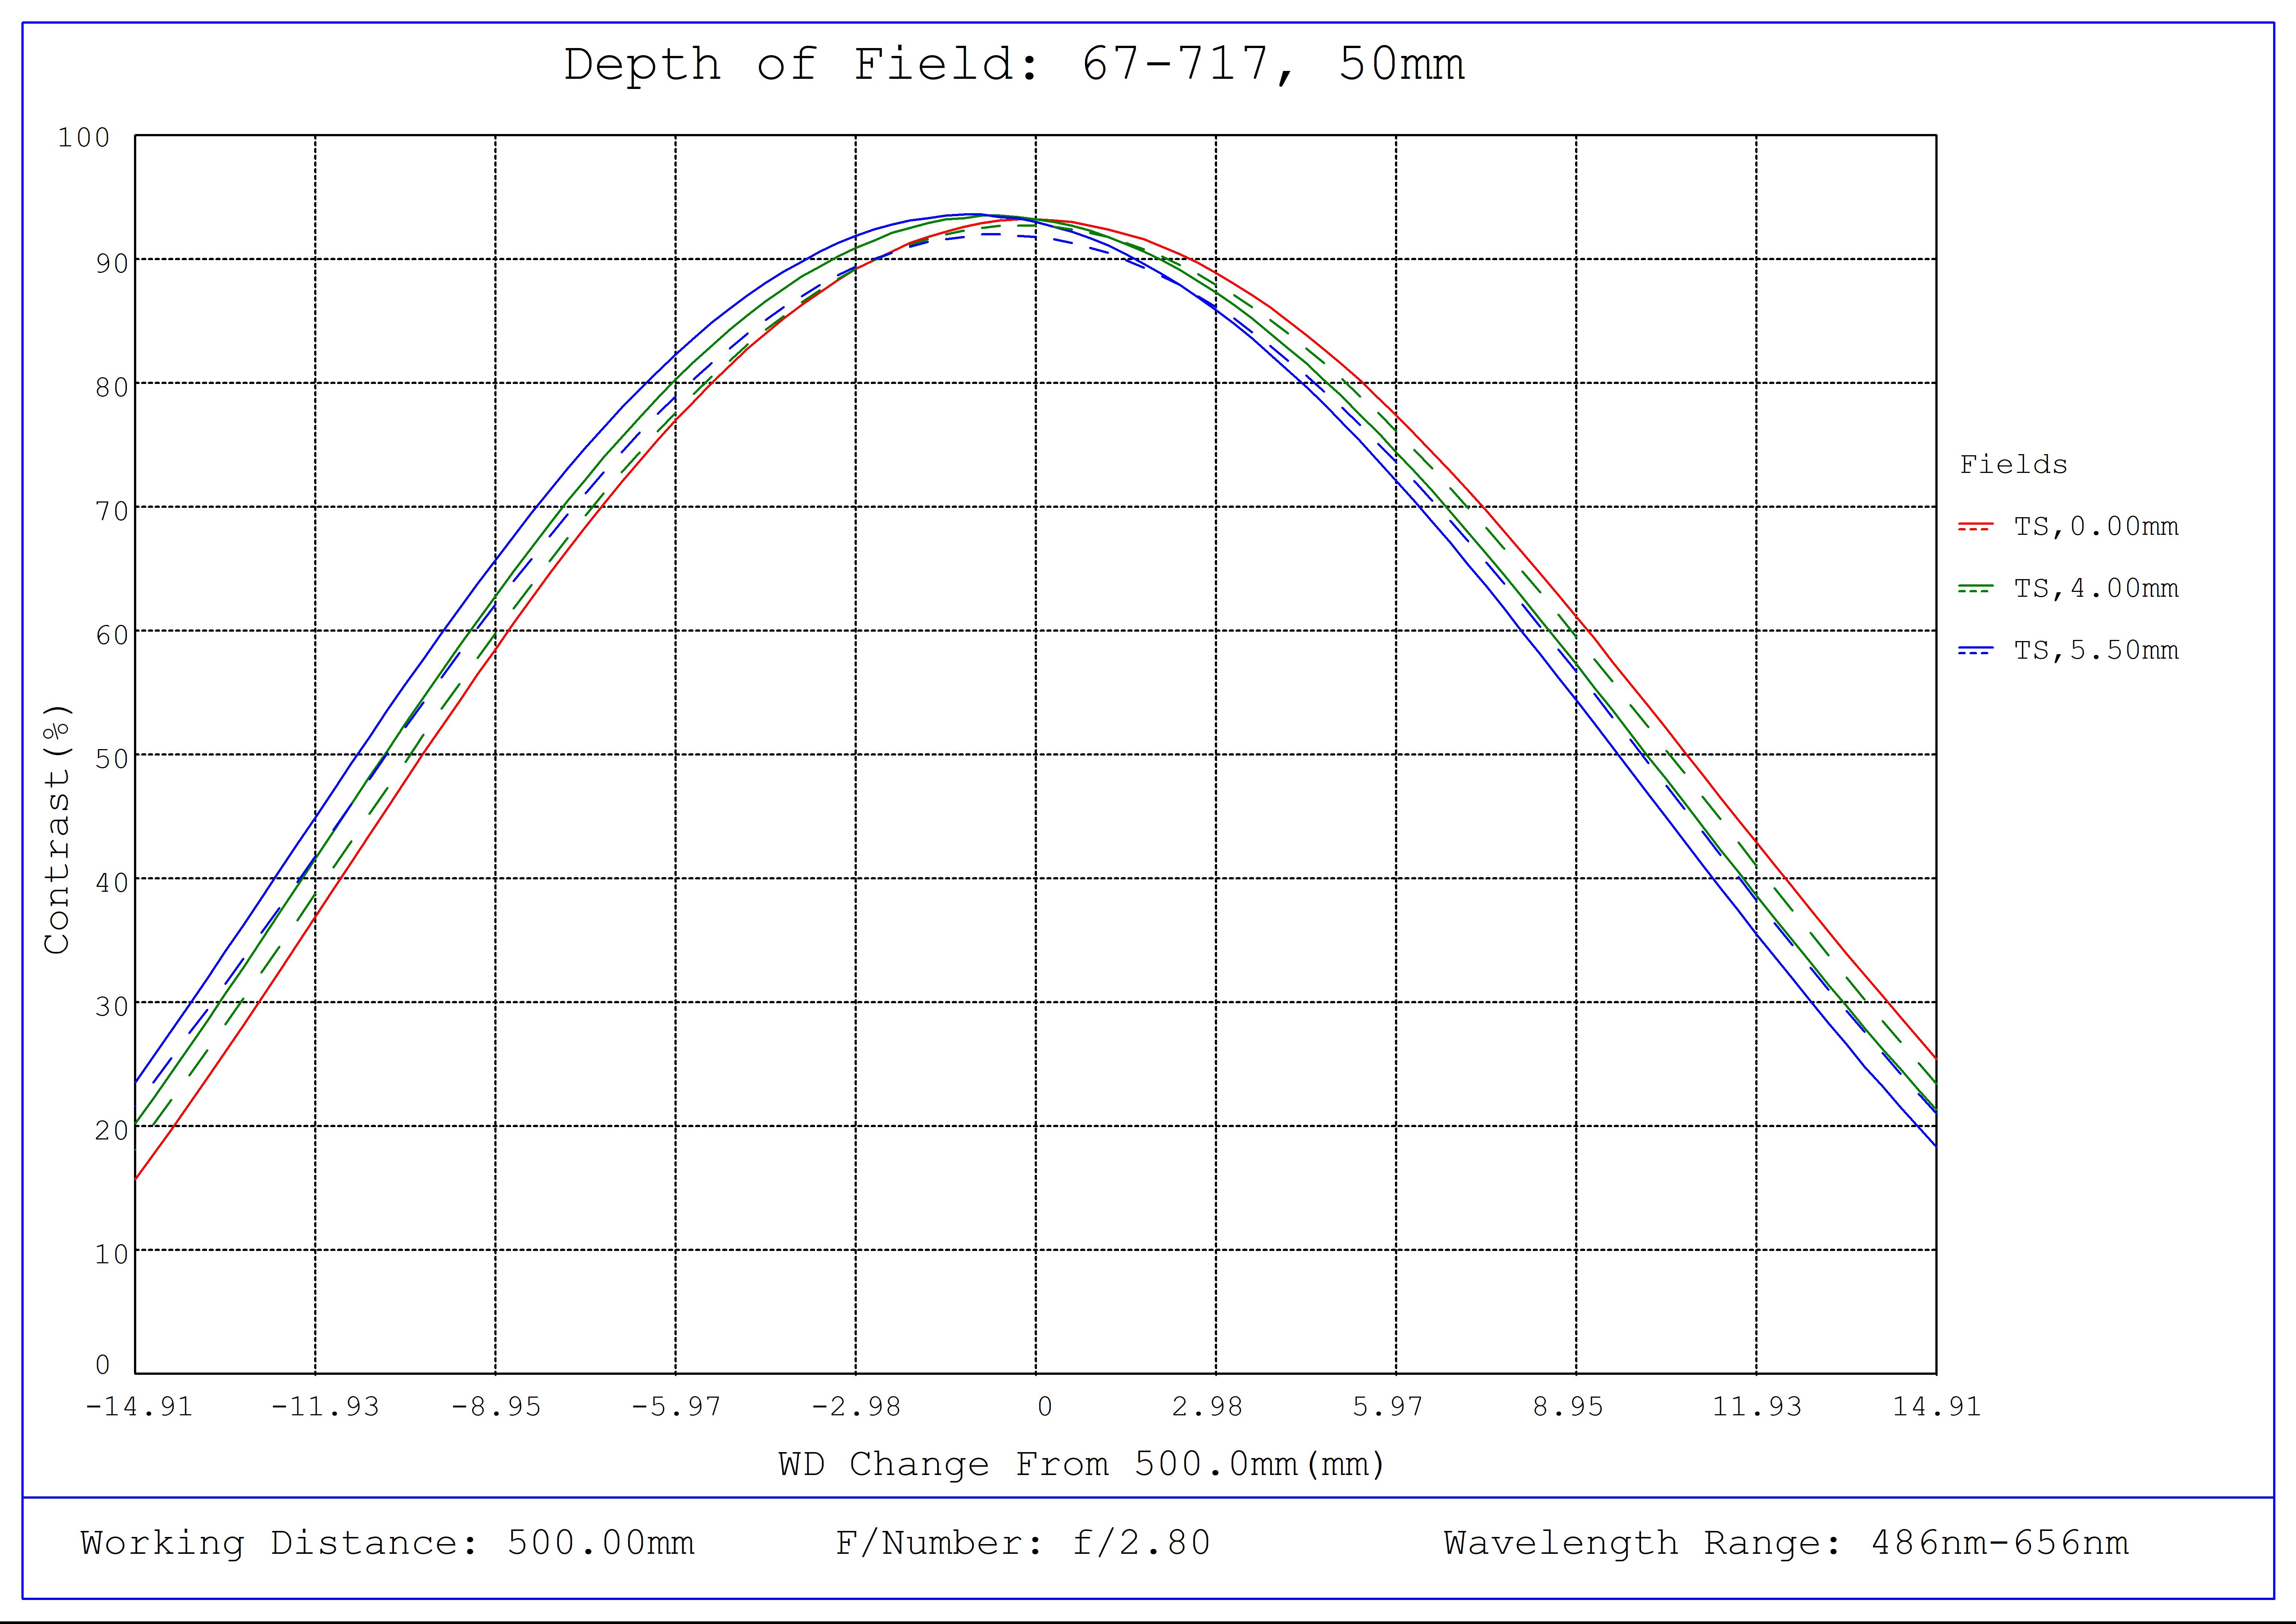 #67-717, 50mm C VIS-NIR Series Fixed Focal Length Lens, Depth of Field Plot, 500mm Working Distance, f2.8